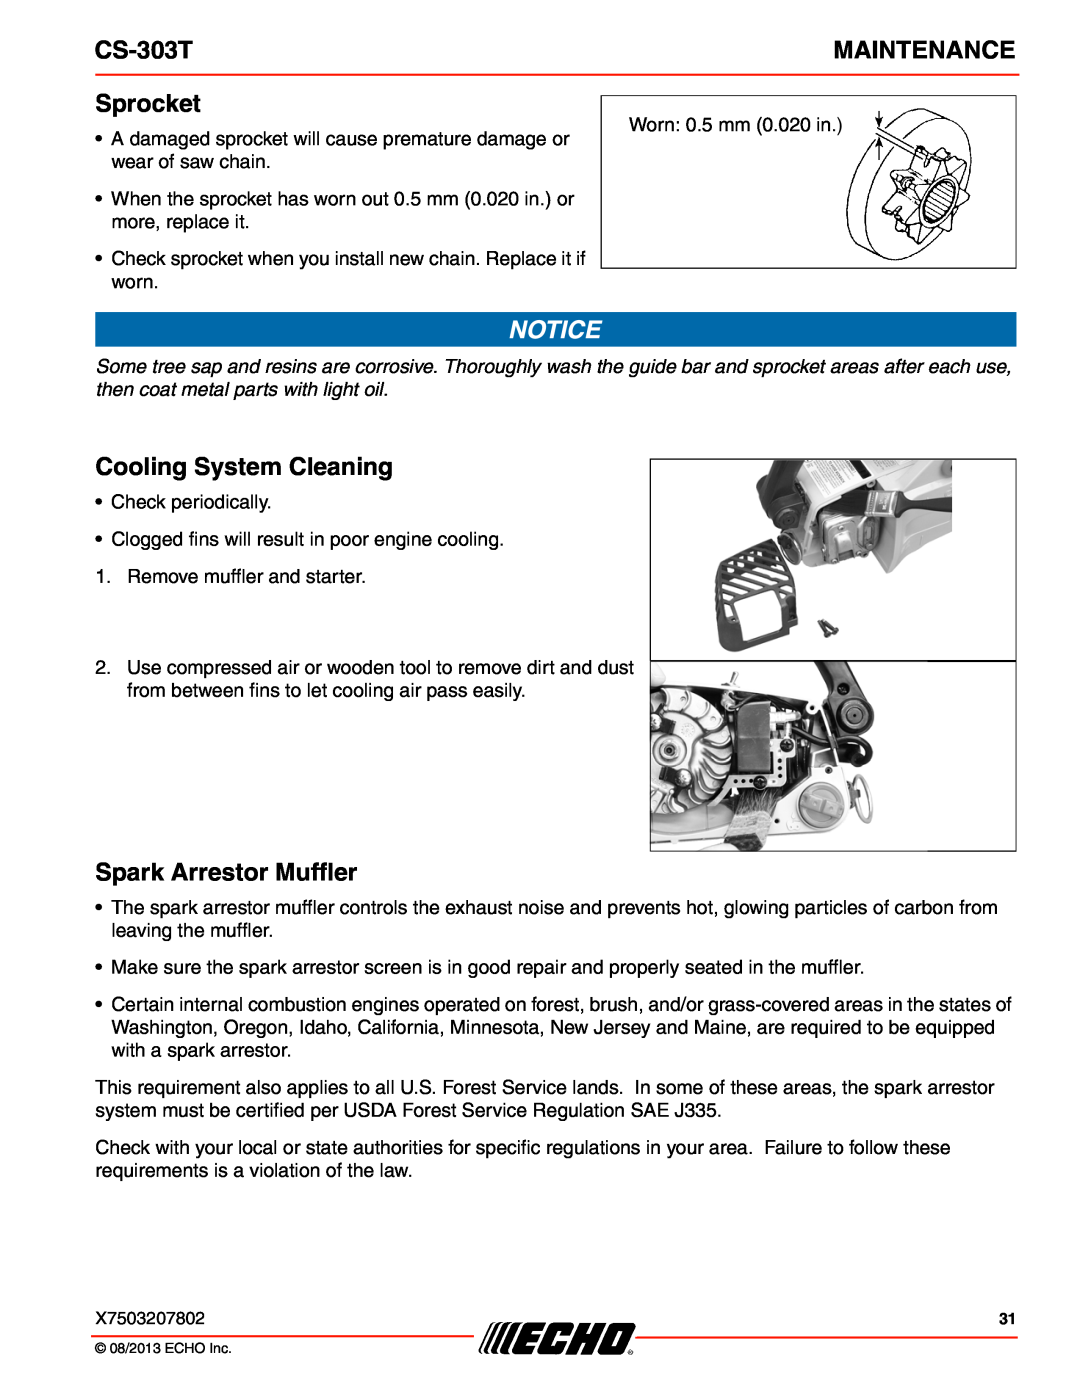 Echo CS-303T instruction manual Sprocket, Cooling System Cleaning, Spark Arrestor Muffler, Maintenance 